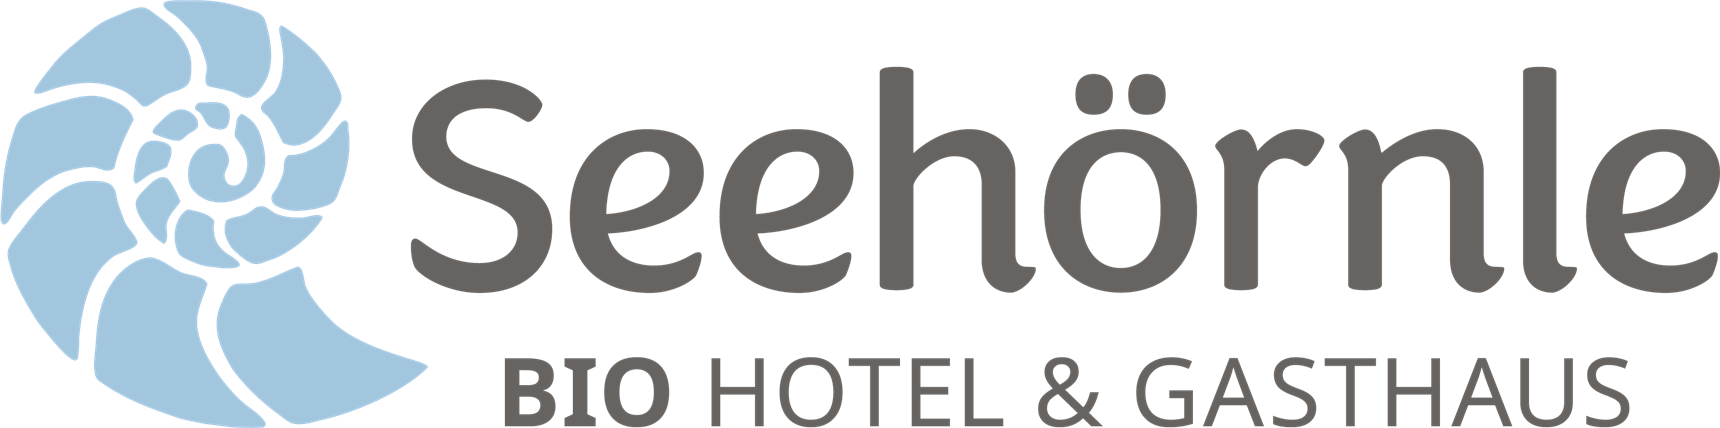 Logo_Seehörnle Bio Hotel & Gasthaus